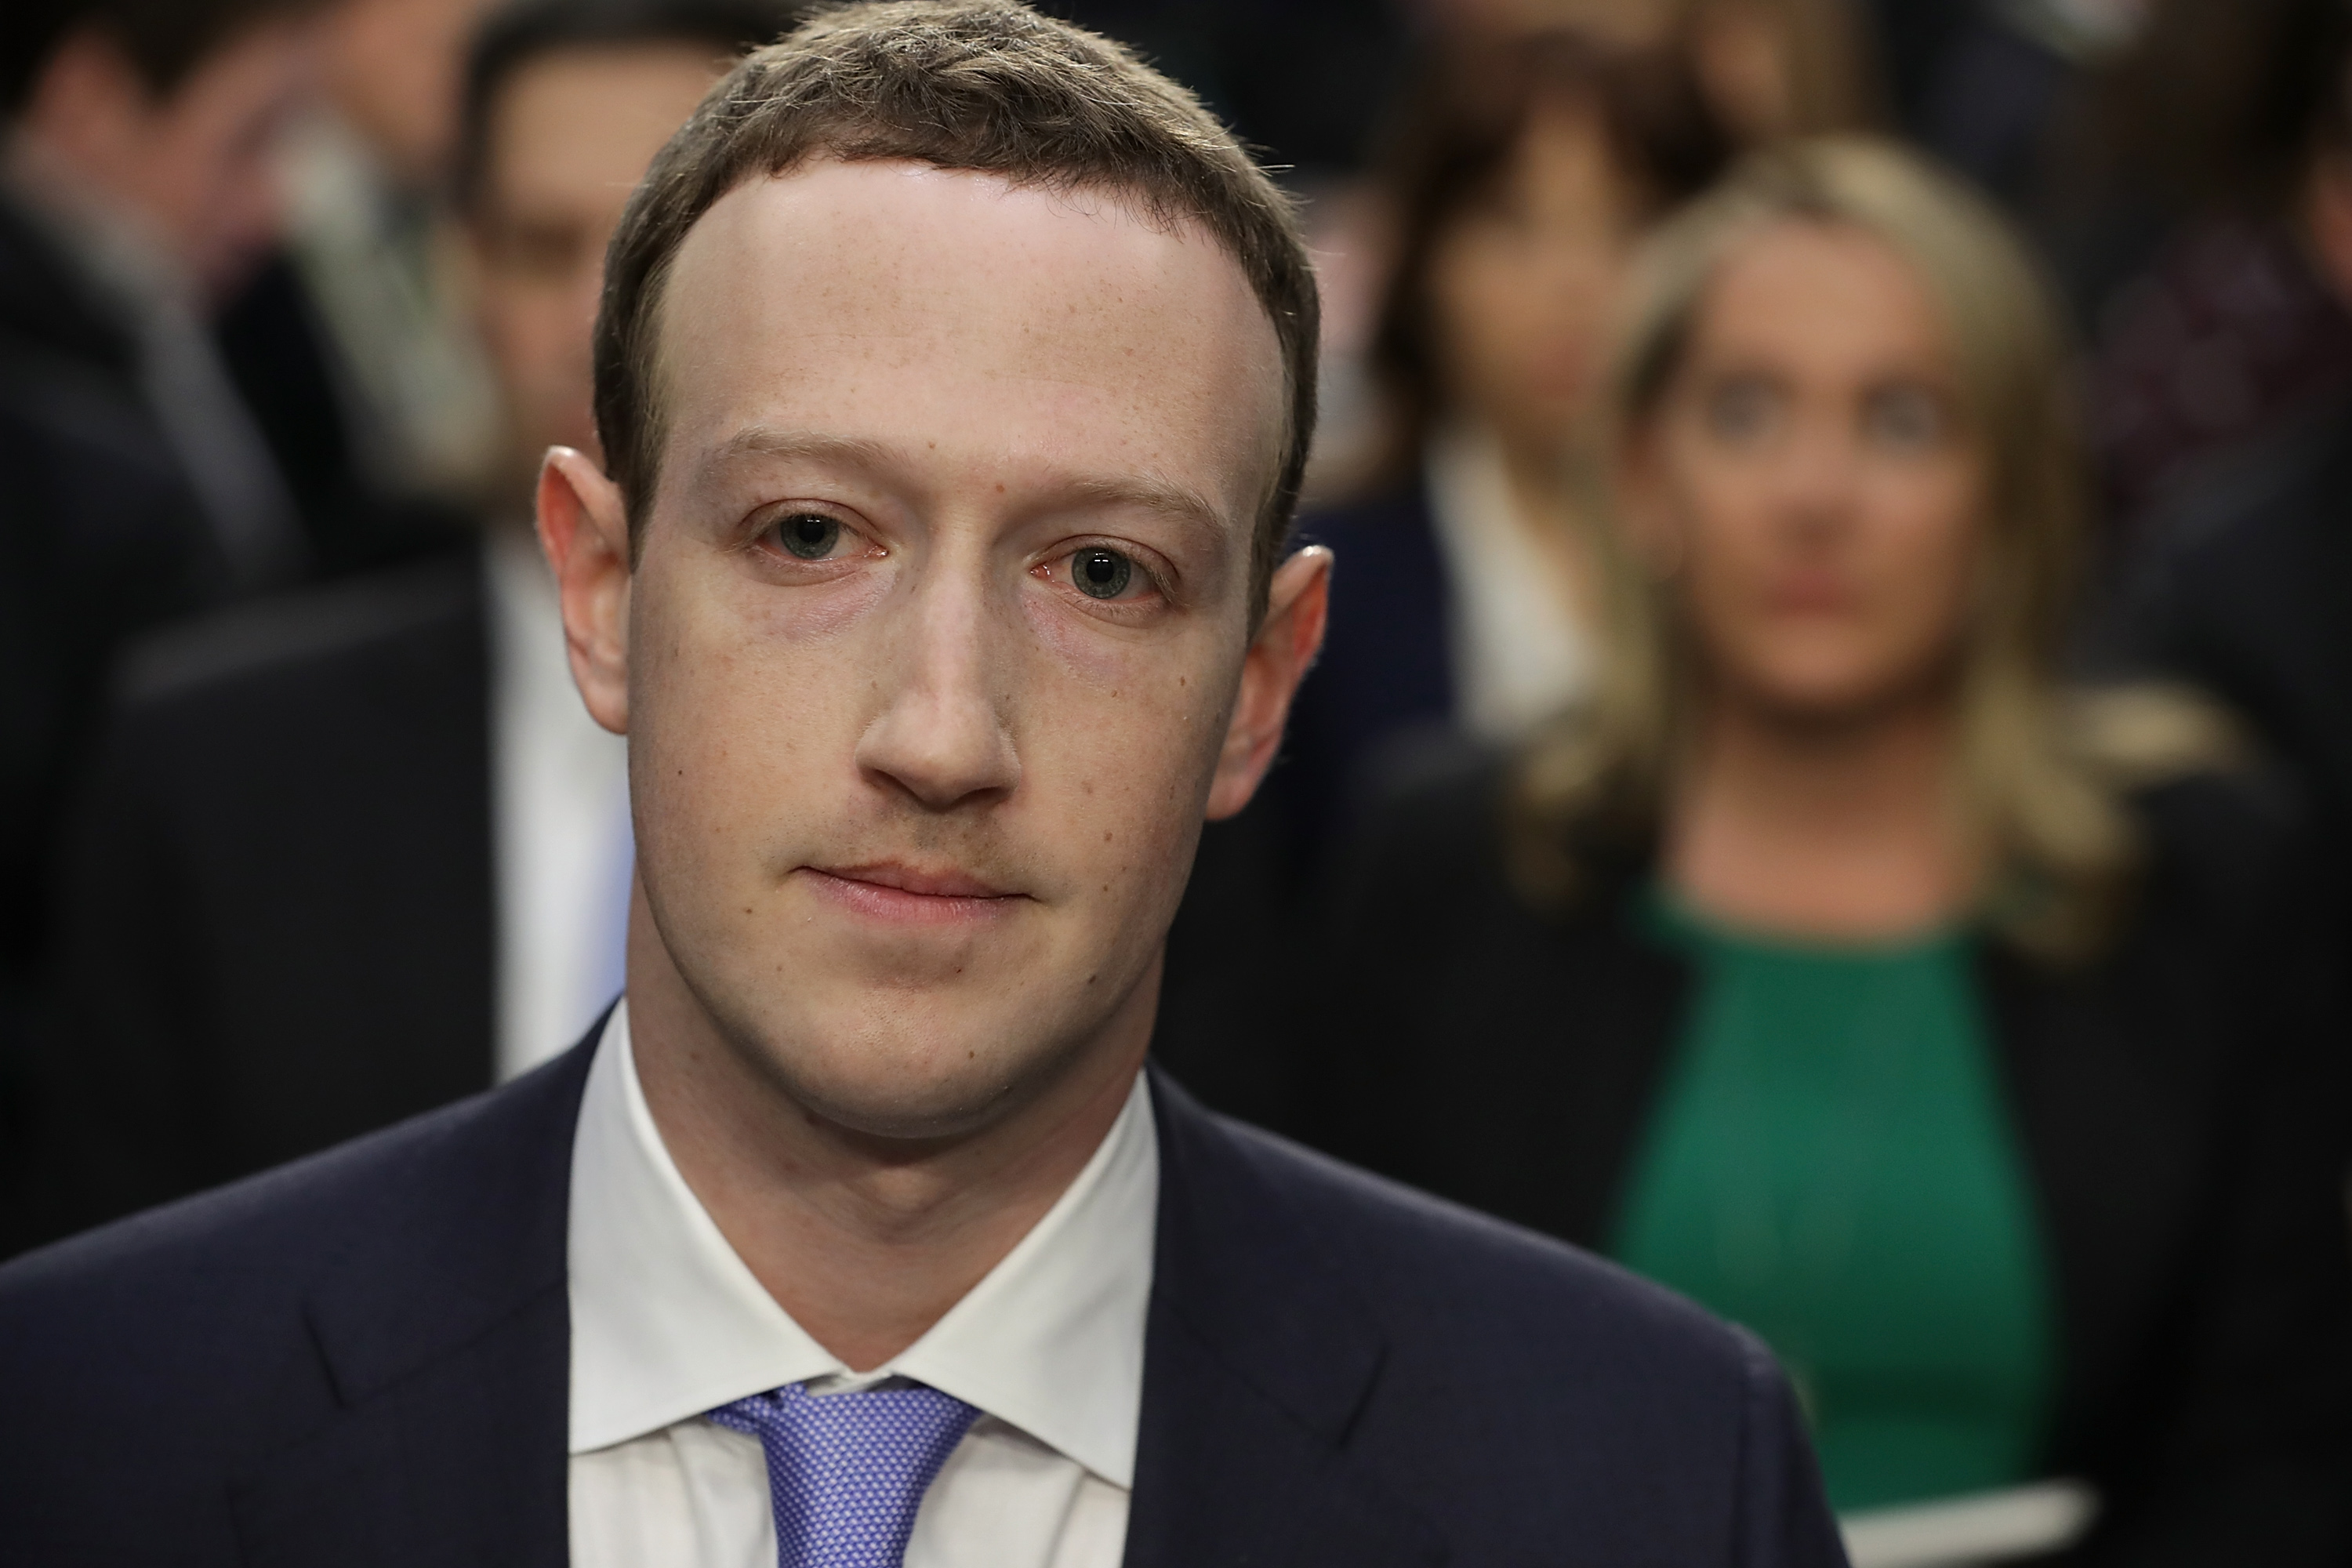 Mark Zuckerberg Lost $16.8 Billion Overnight as Facebook Stock Plunged